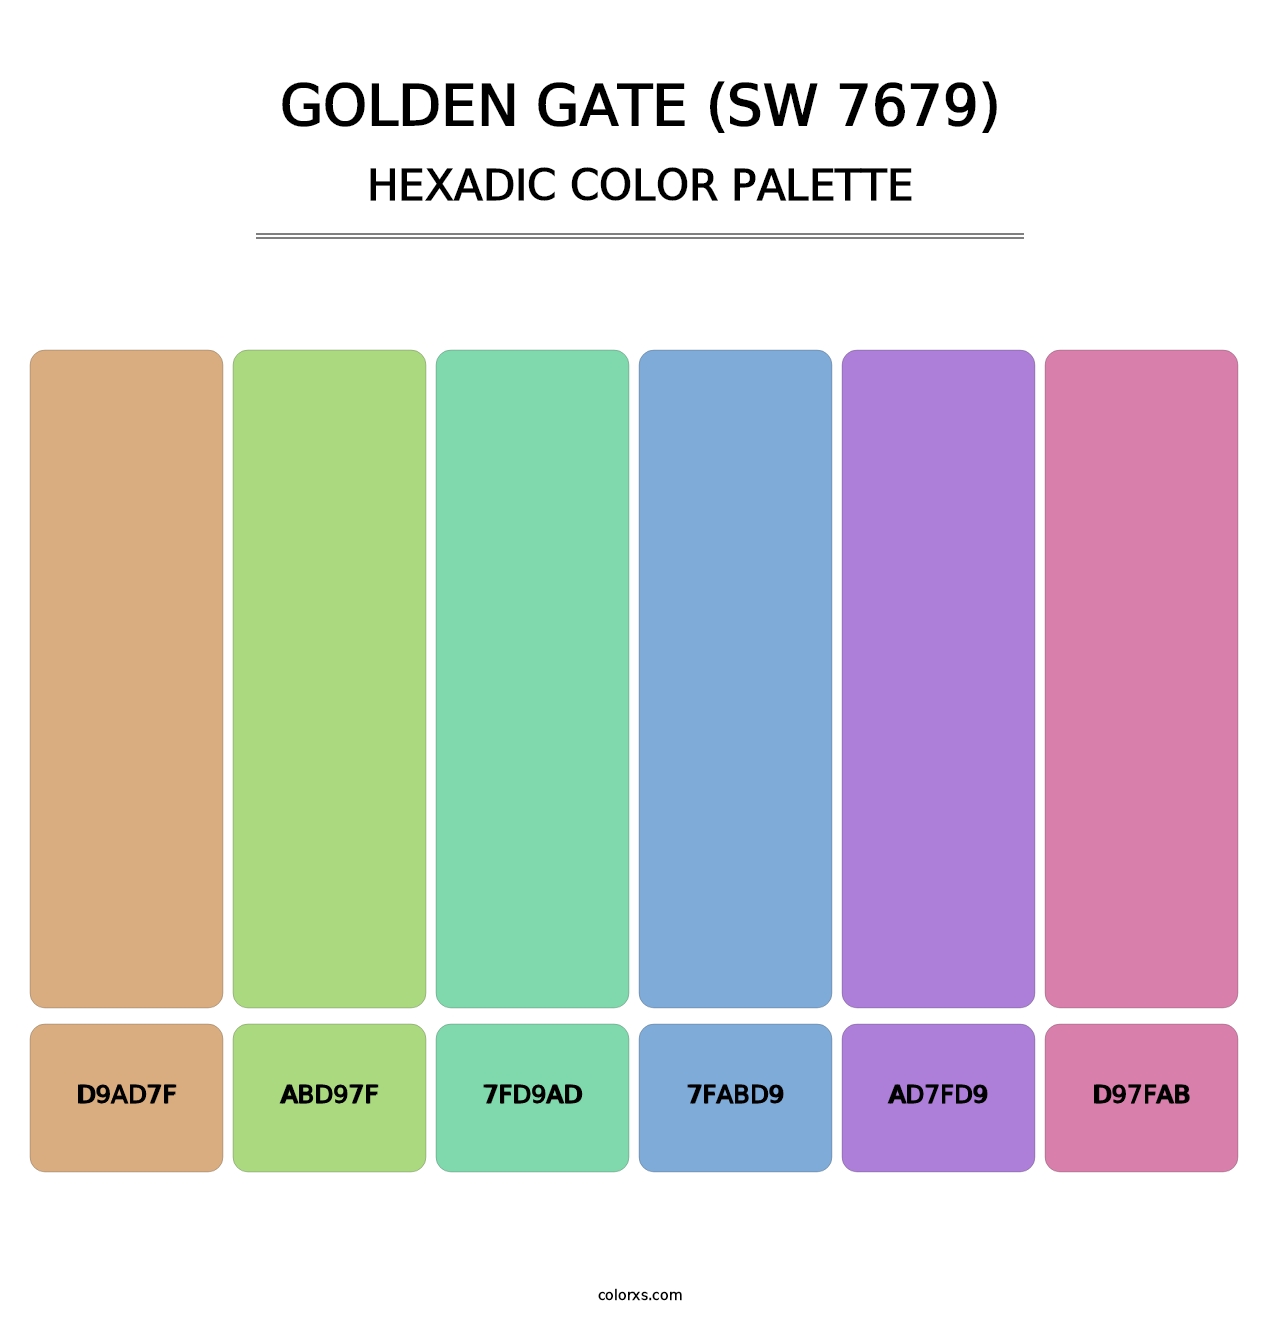 Golden Gate (SW 7679) - Hexadic Color Palette